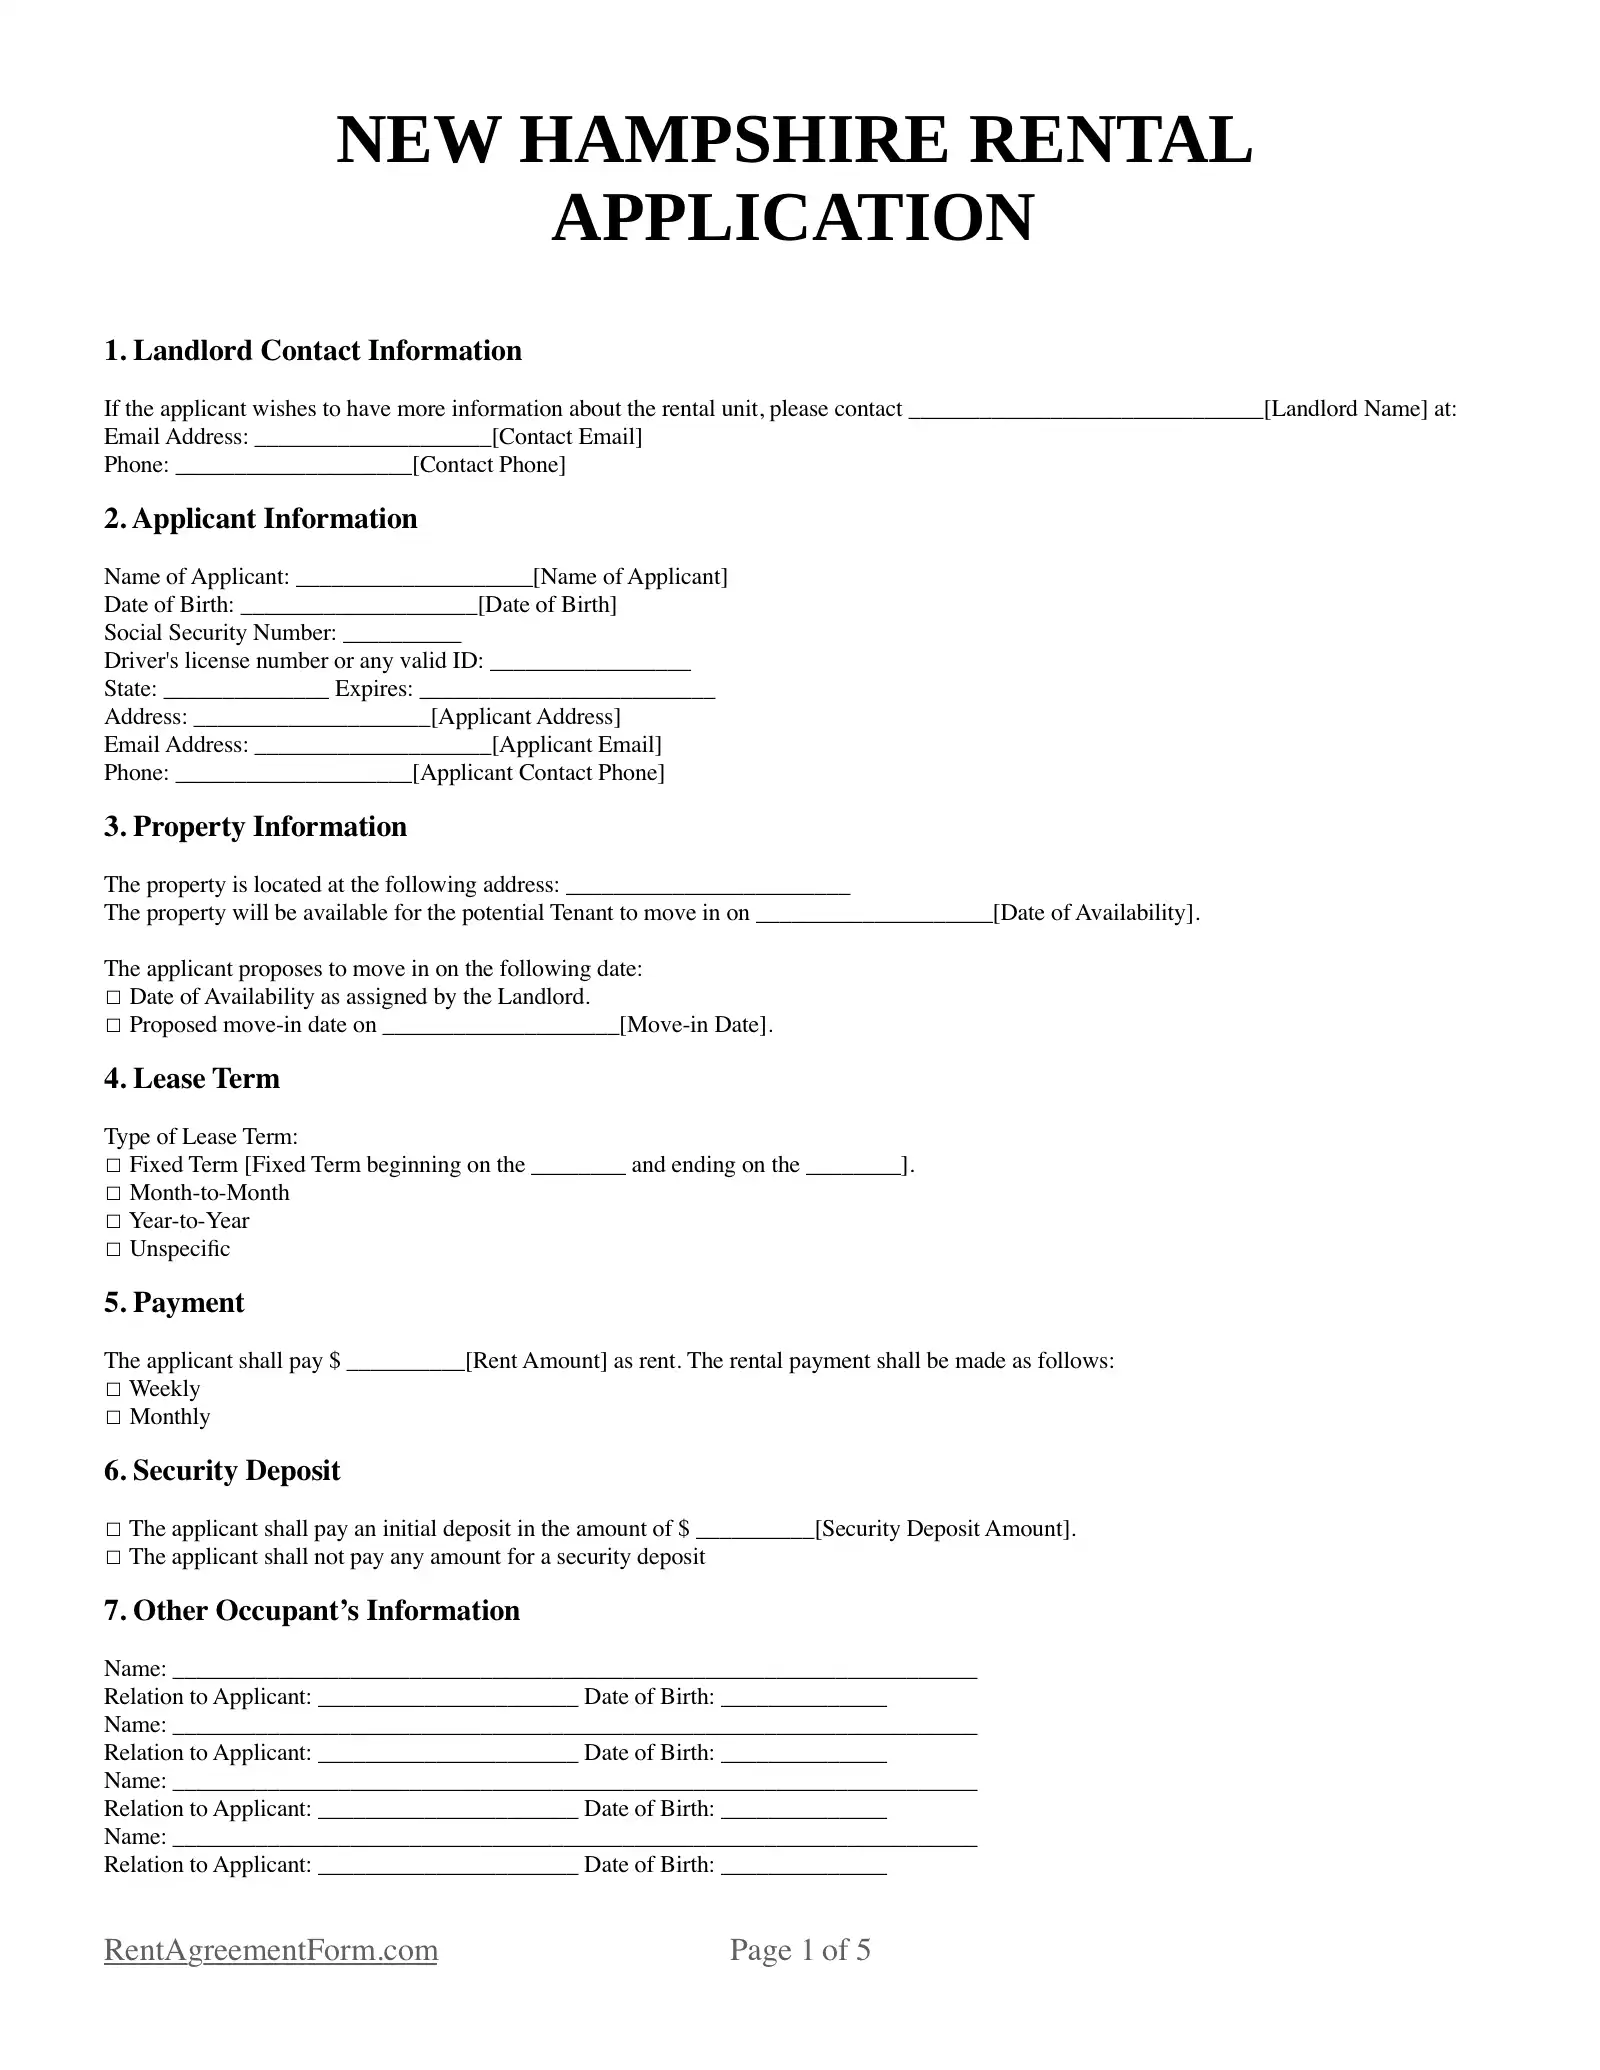 New Hampshire Rental Application Sample